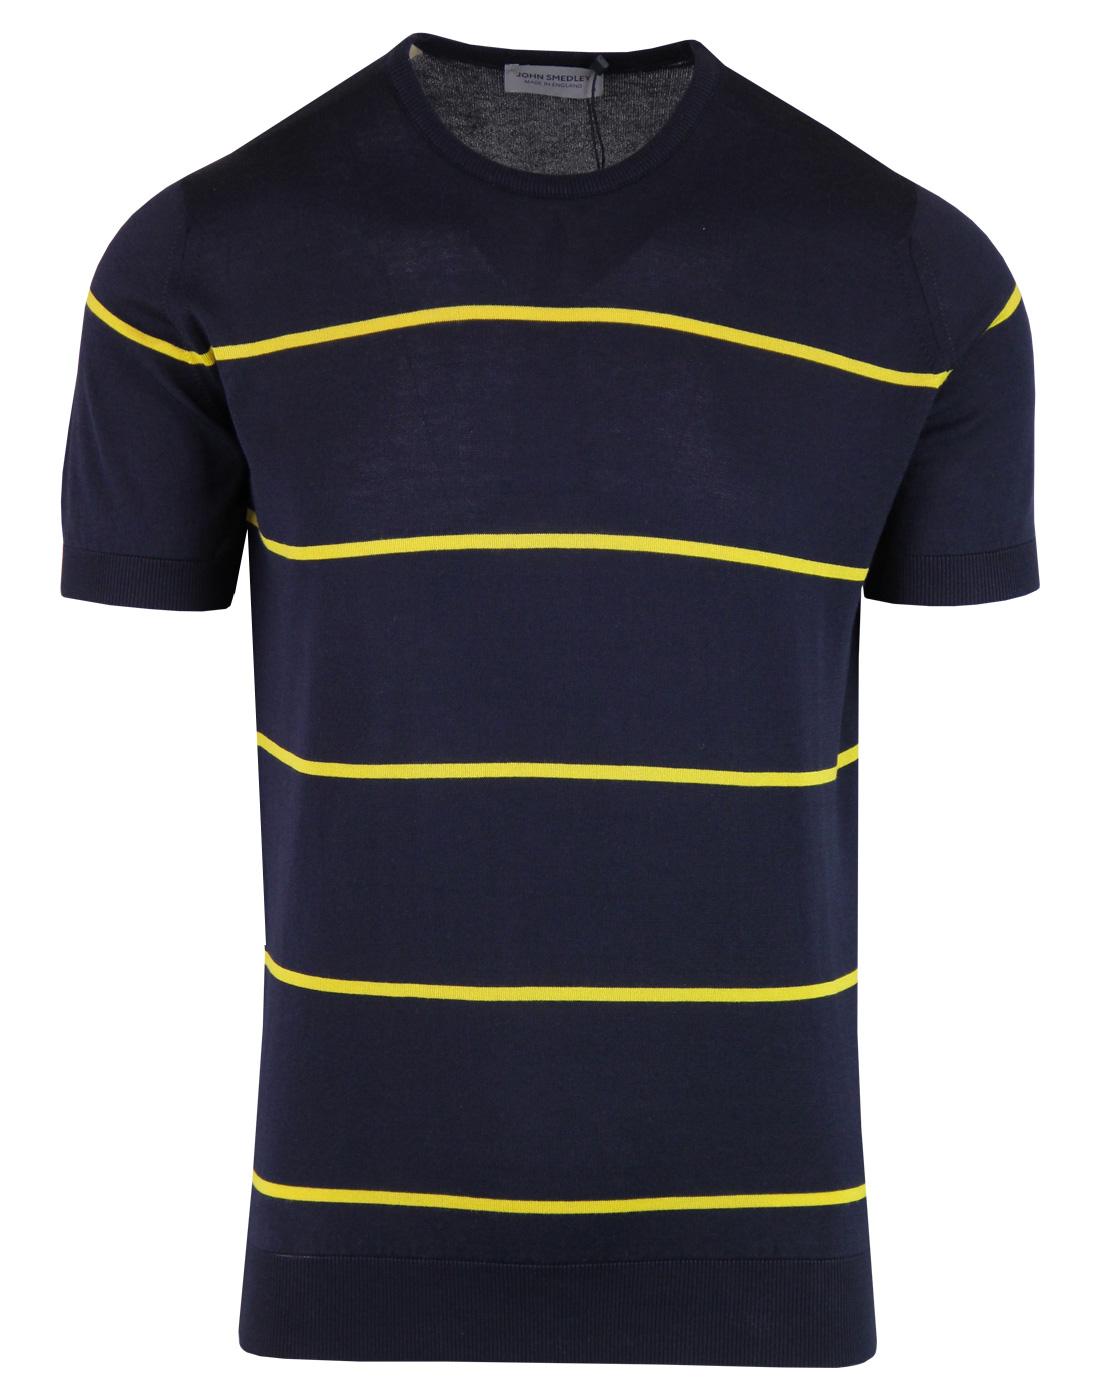 Barlby JOHN SMEDLEY Retro Mod Striped T-shirt (N)